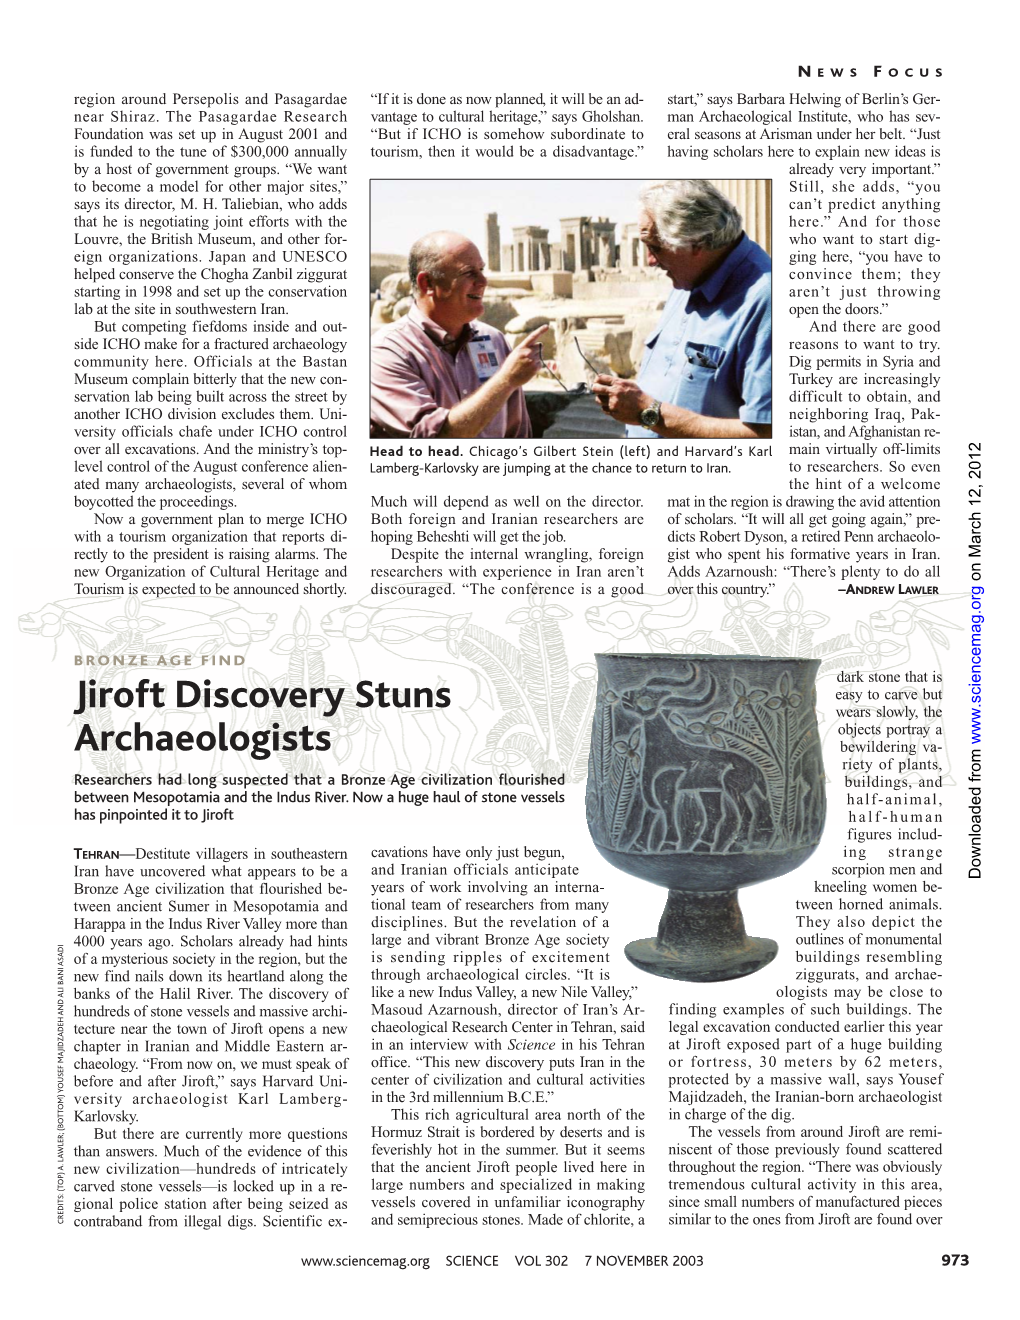 Jiroft Discovery Stuns Archaeologists